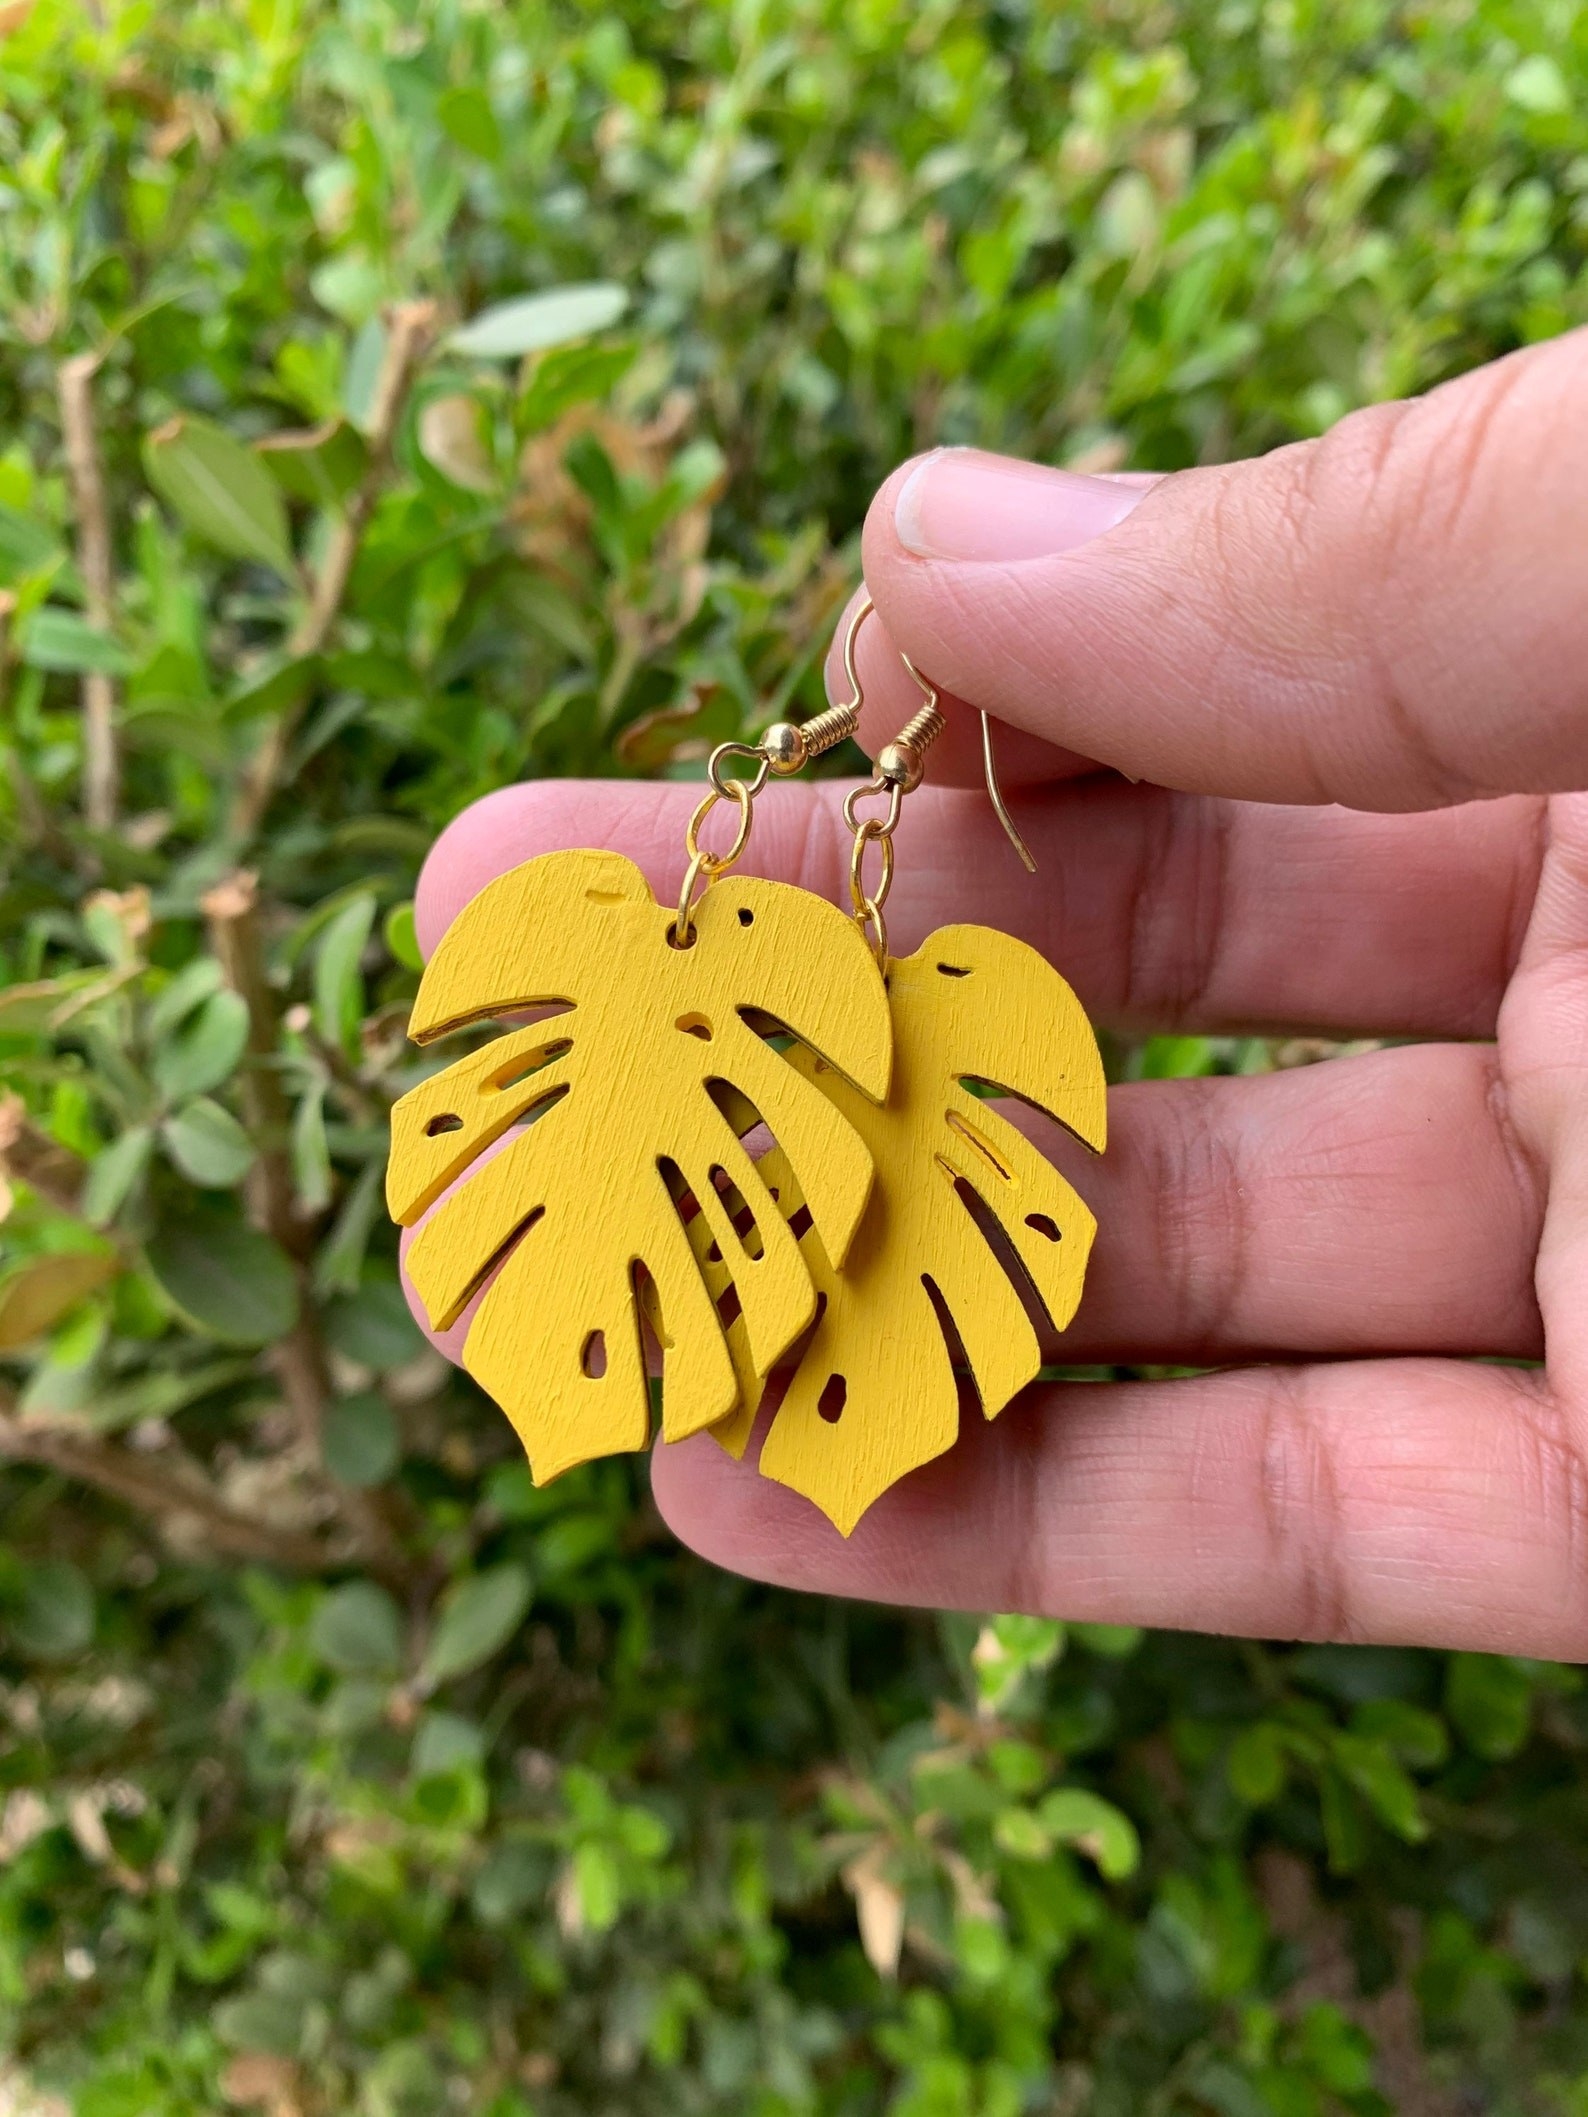 Model holding yellow monstera leaf earrings in hand